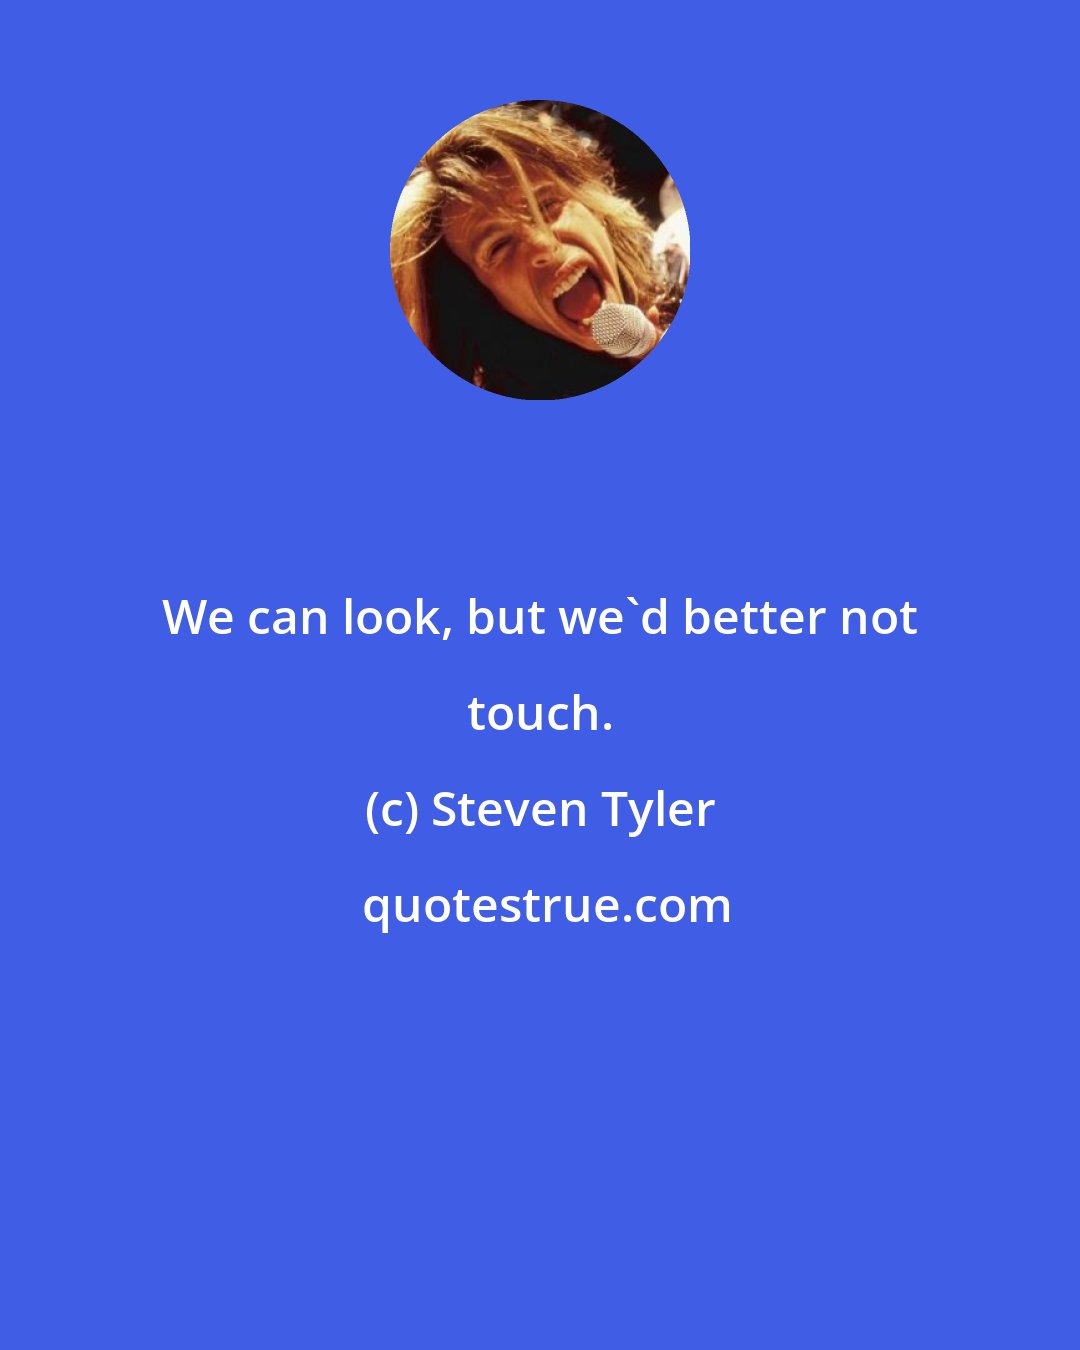 Steven Tyler: We can look, but we'd better not touch.